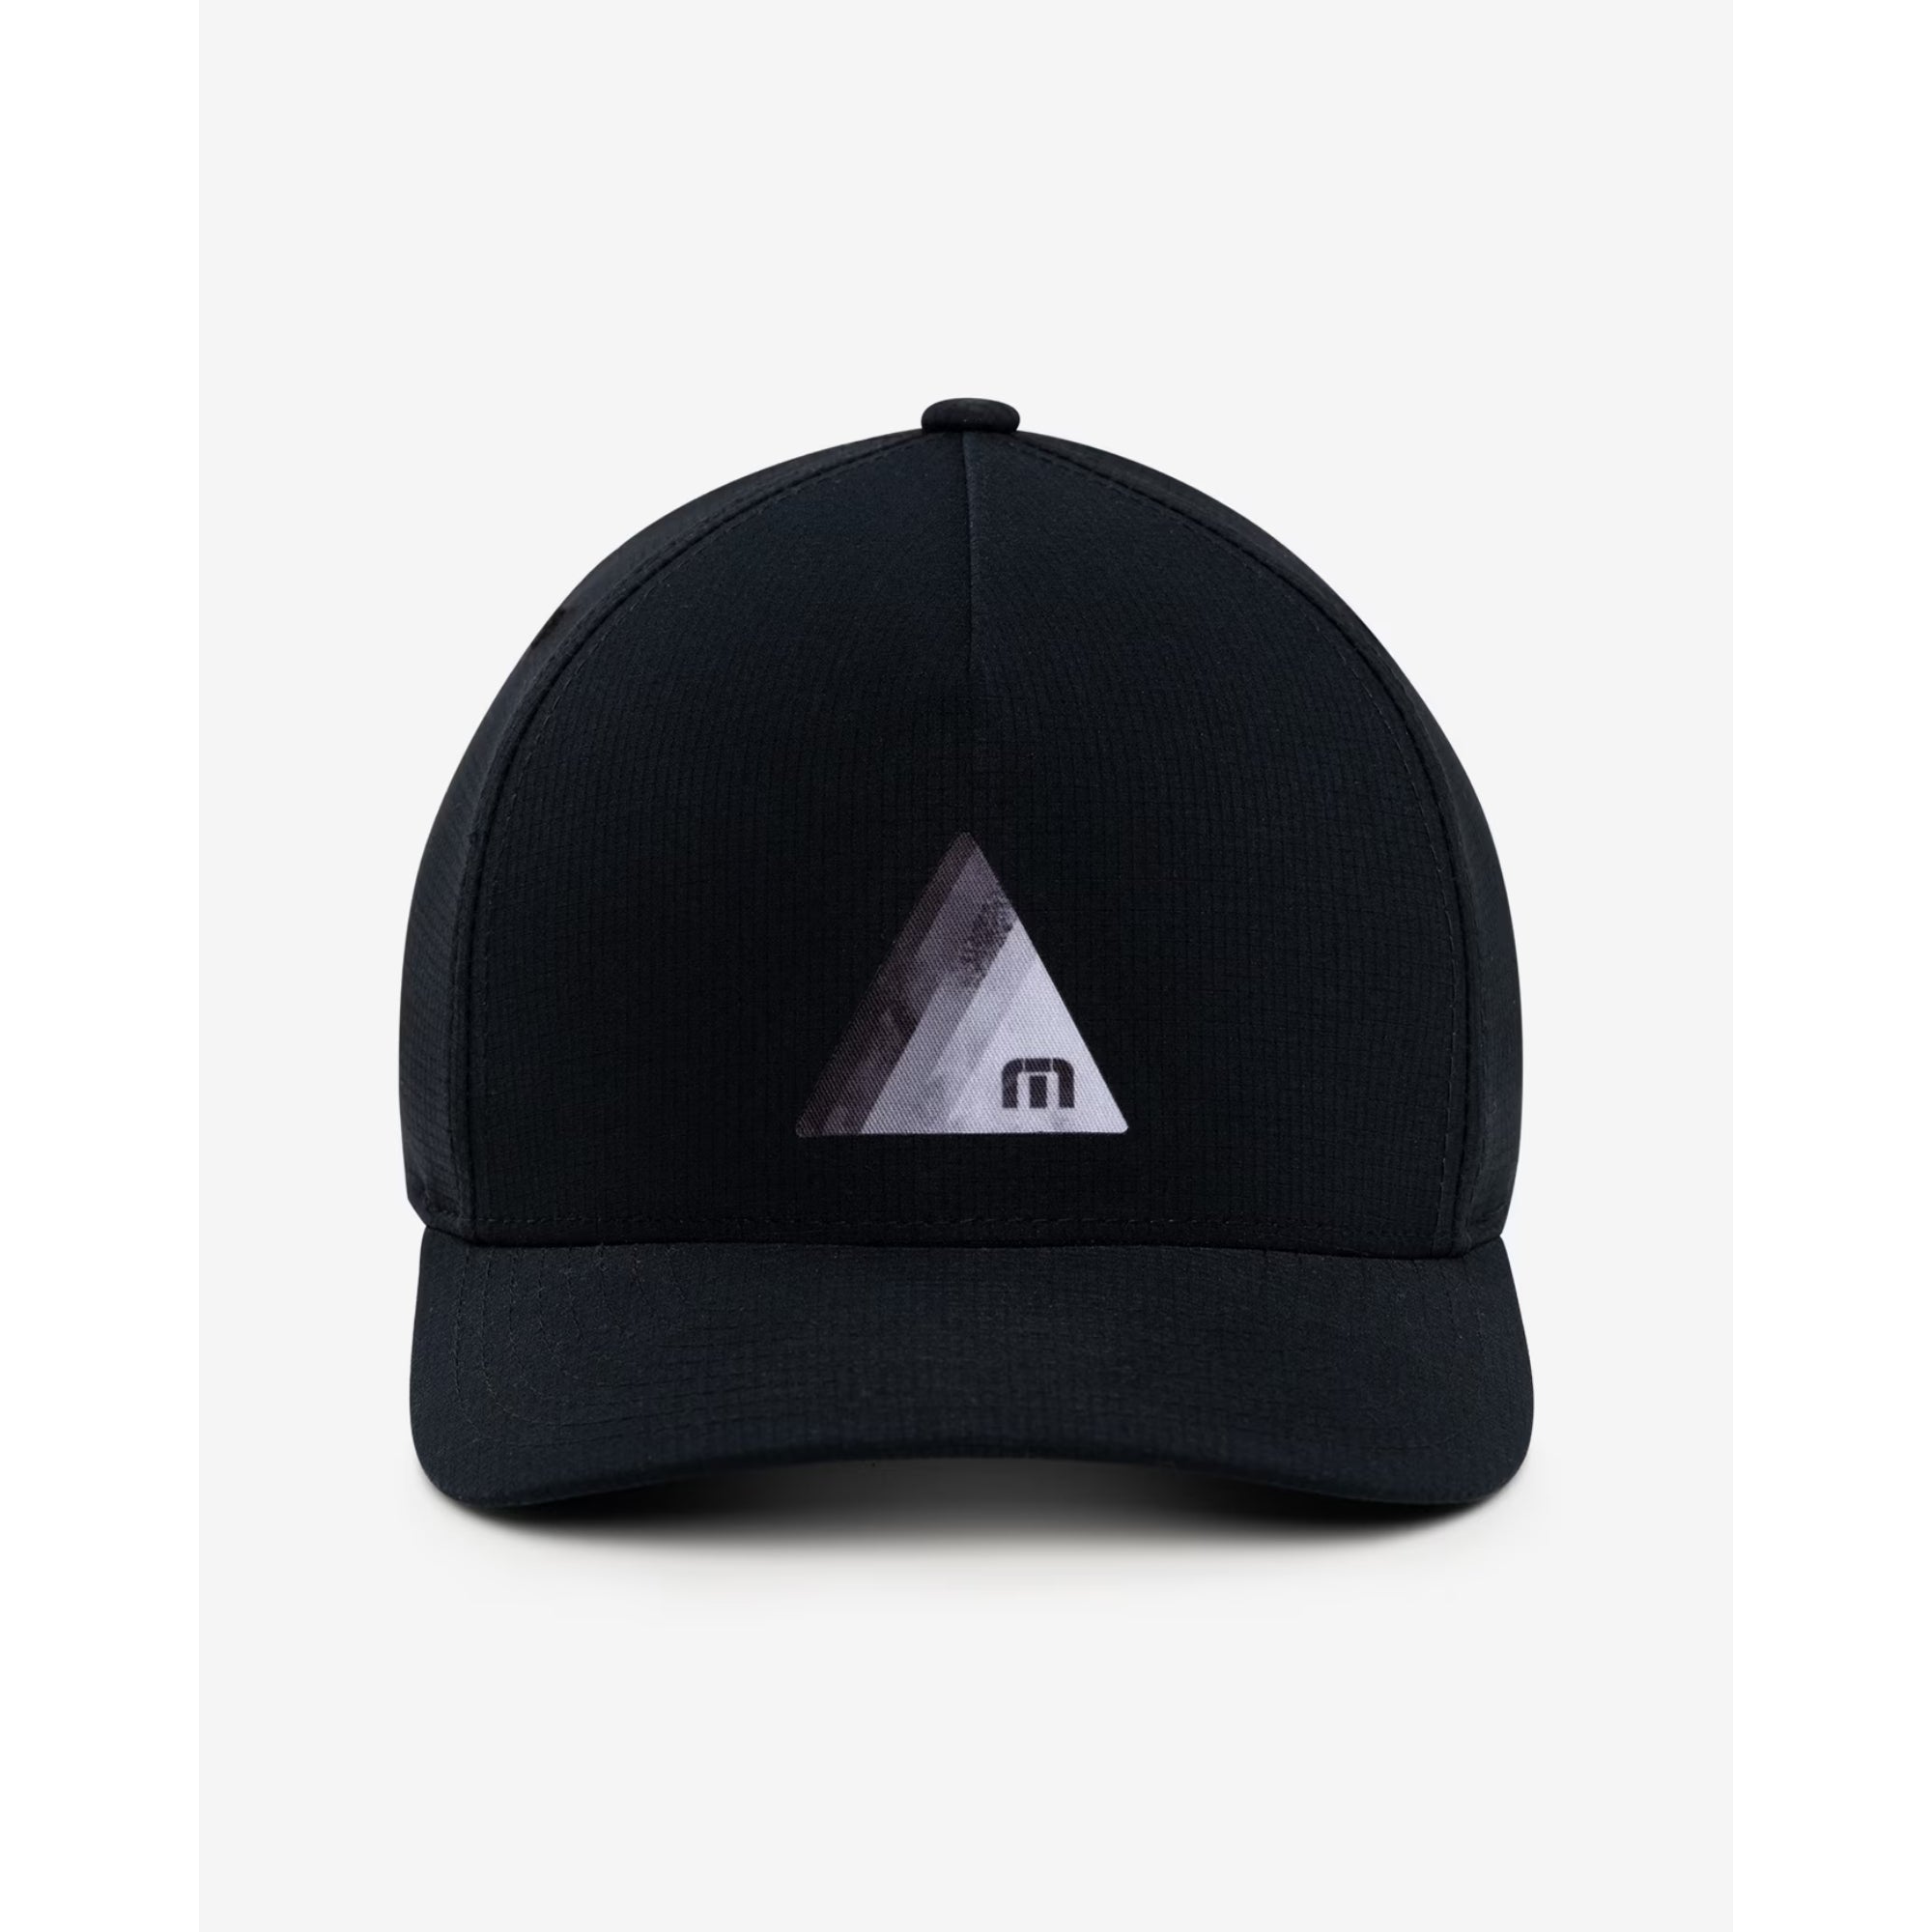 TravisMathew Men's The Heater Snapback Hat in Black, Breathable